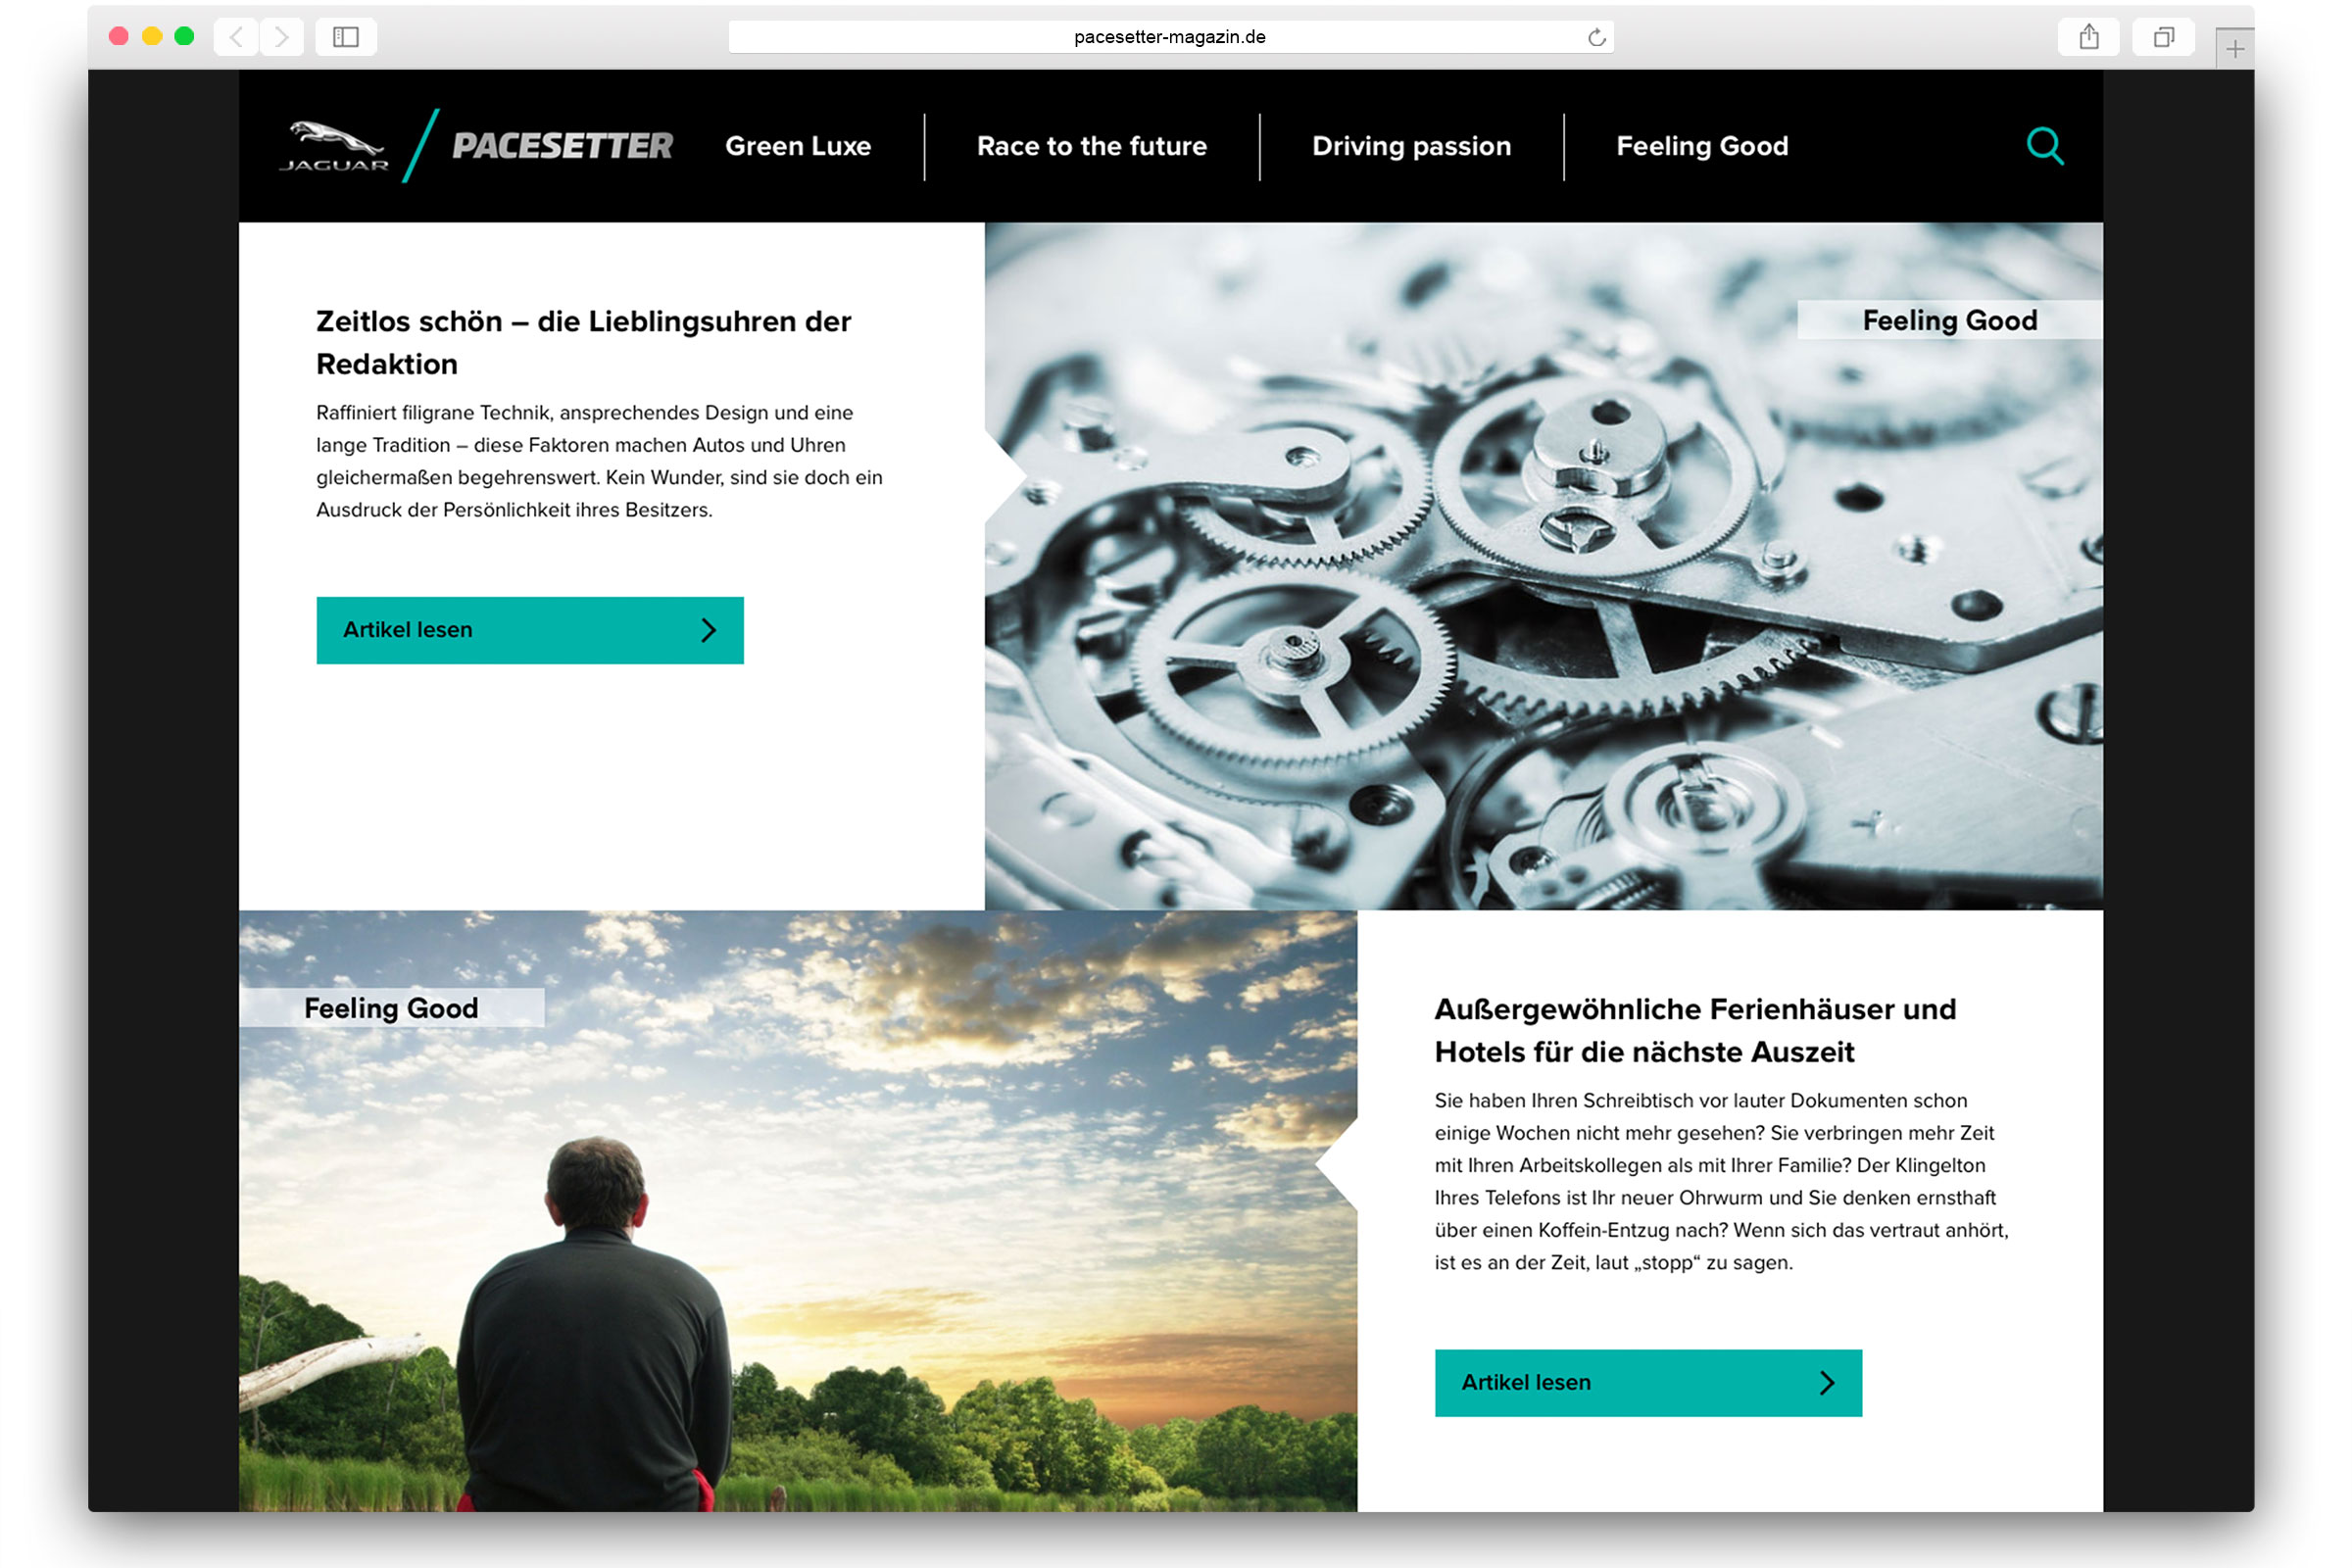 Jaguar-Pacesetter-Online-Magazin-Elektroauto-Ipace-Nachhaltigkeit-lewis pr-communication